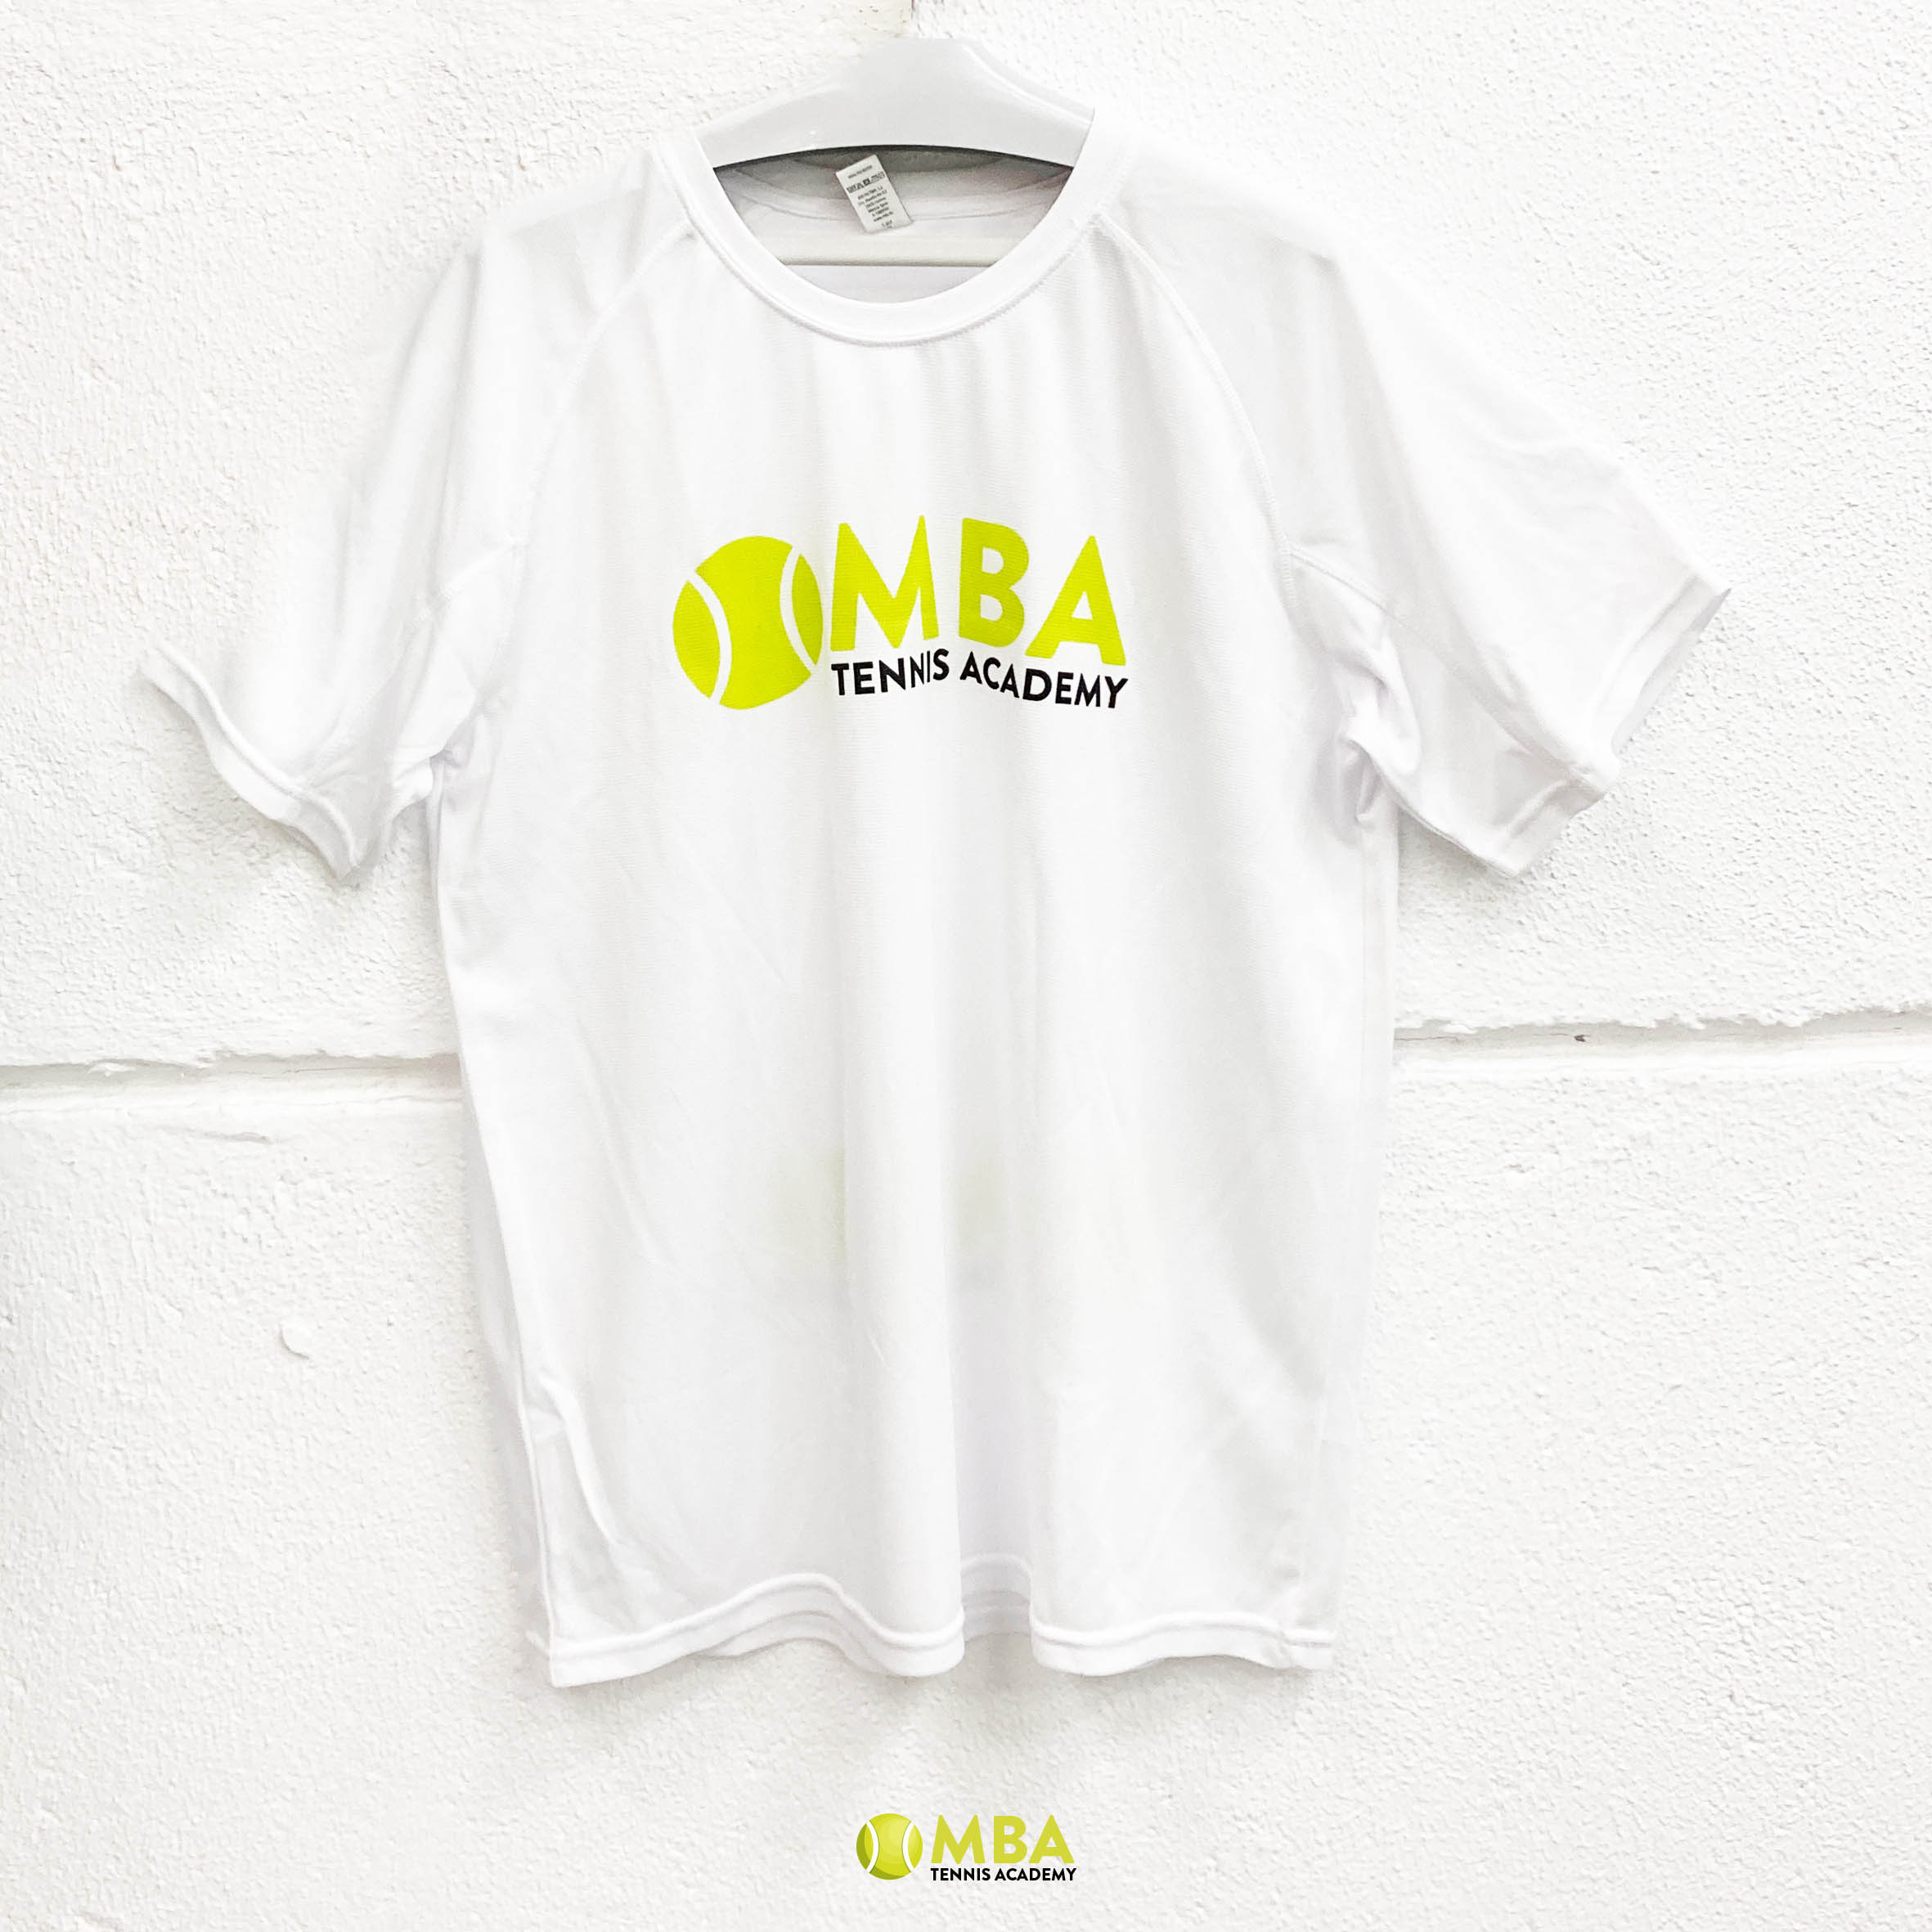 MBA-Tennis-Academy-camiseta-blanca-hombre-1